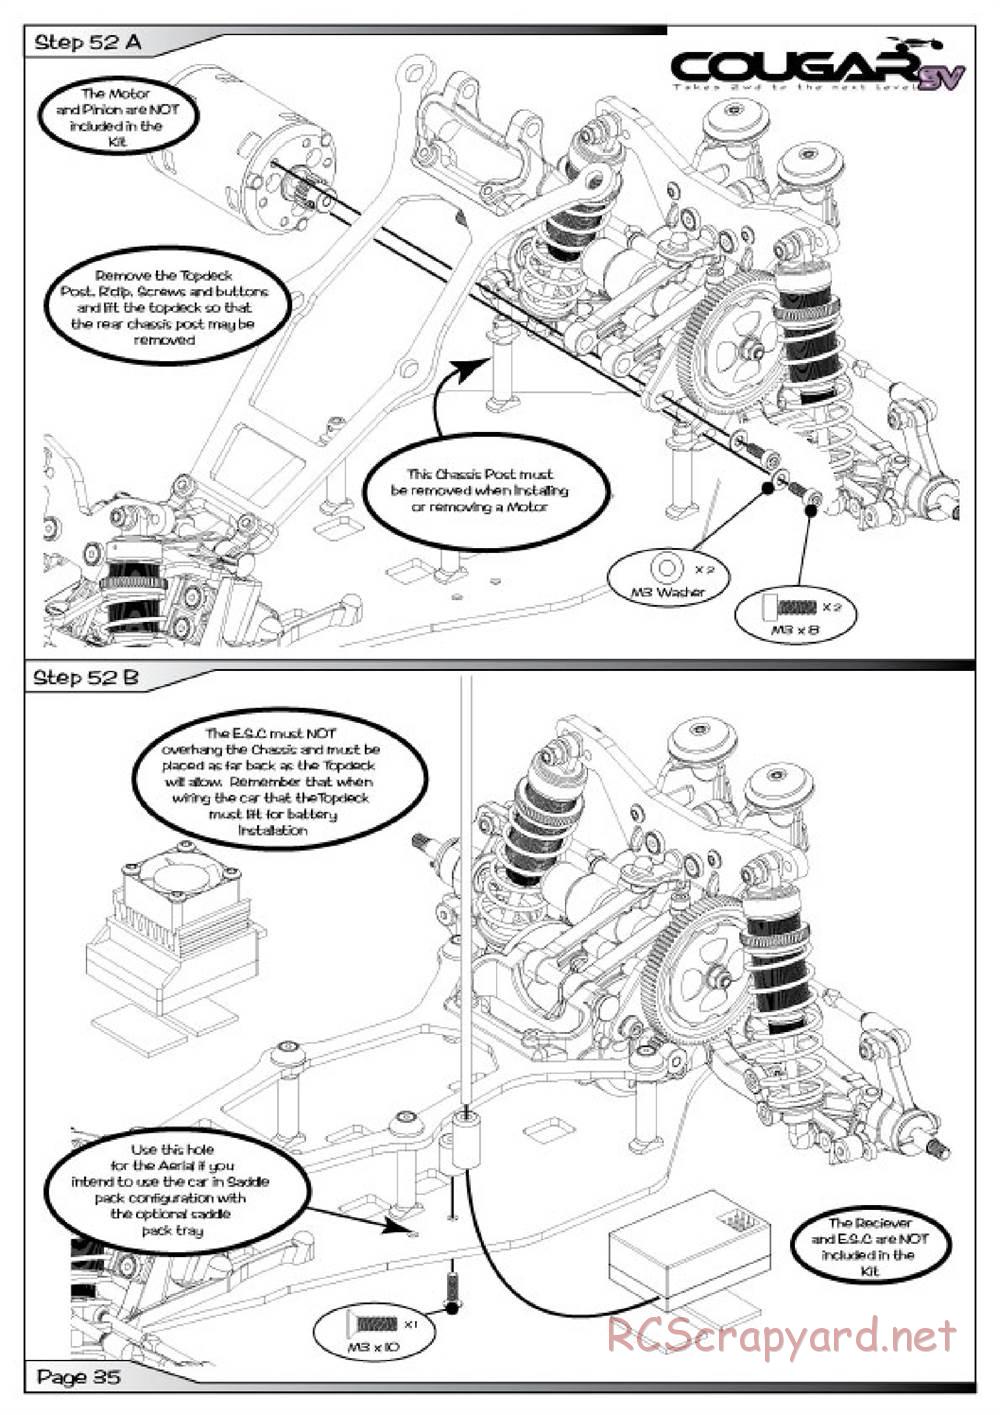 Schumacher - Cougar SV - Manual - Page 36